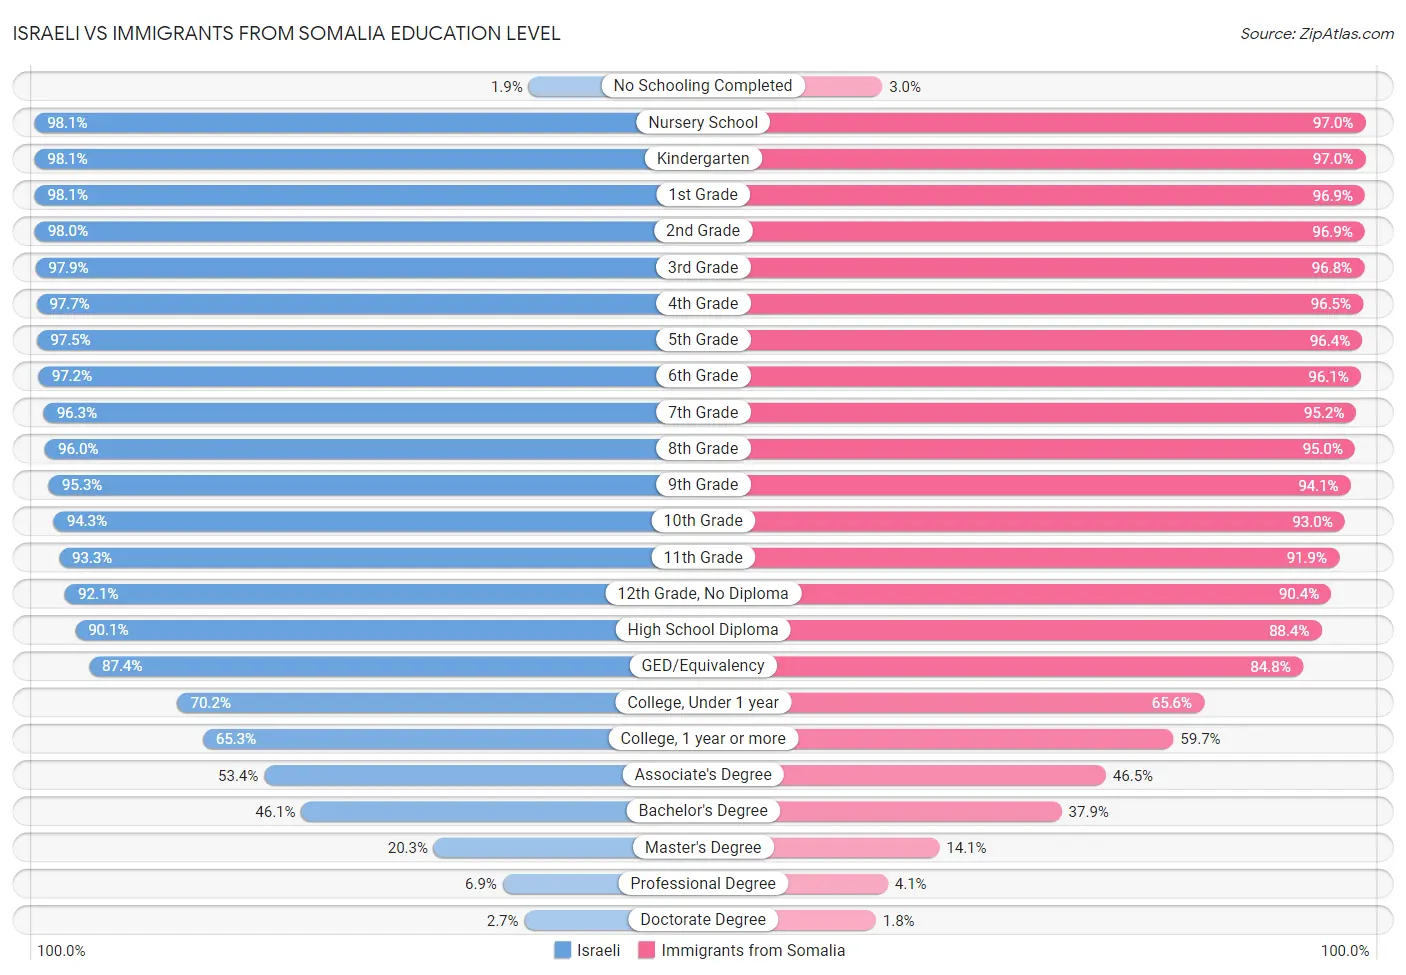 Israeli vs Immigrants from Somalia Education Level